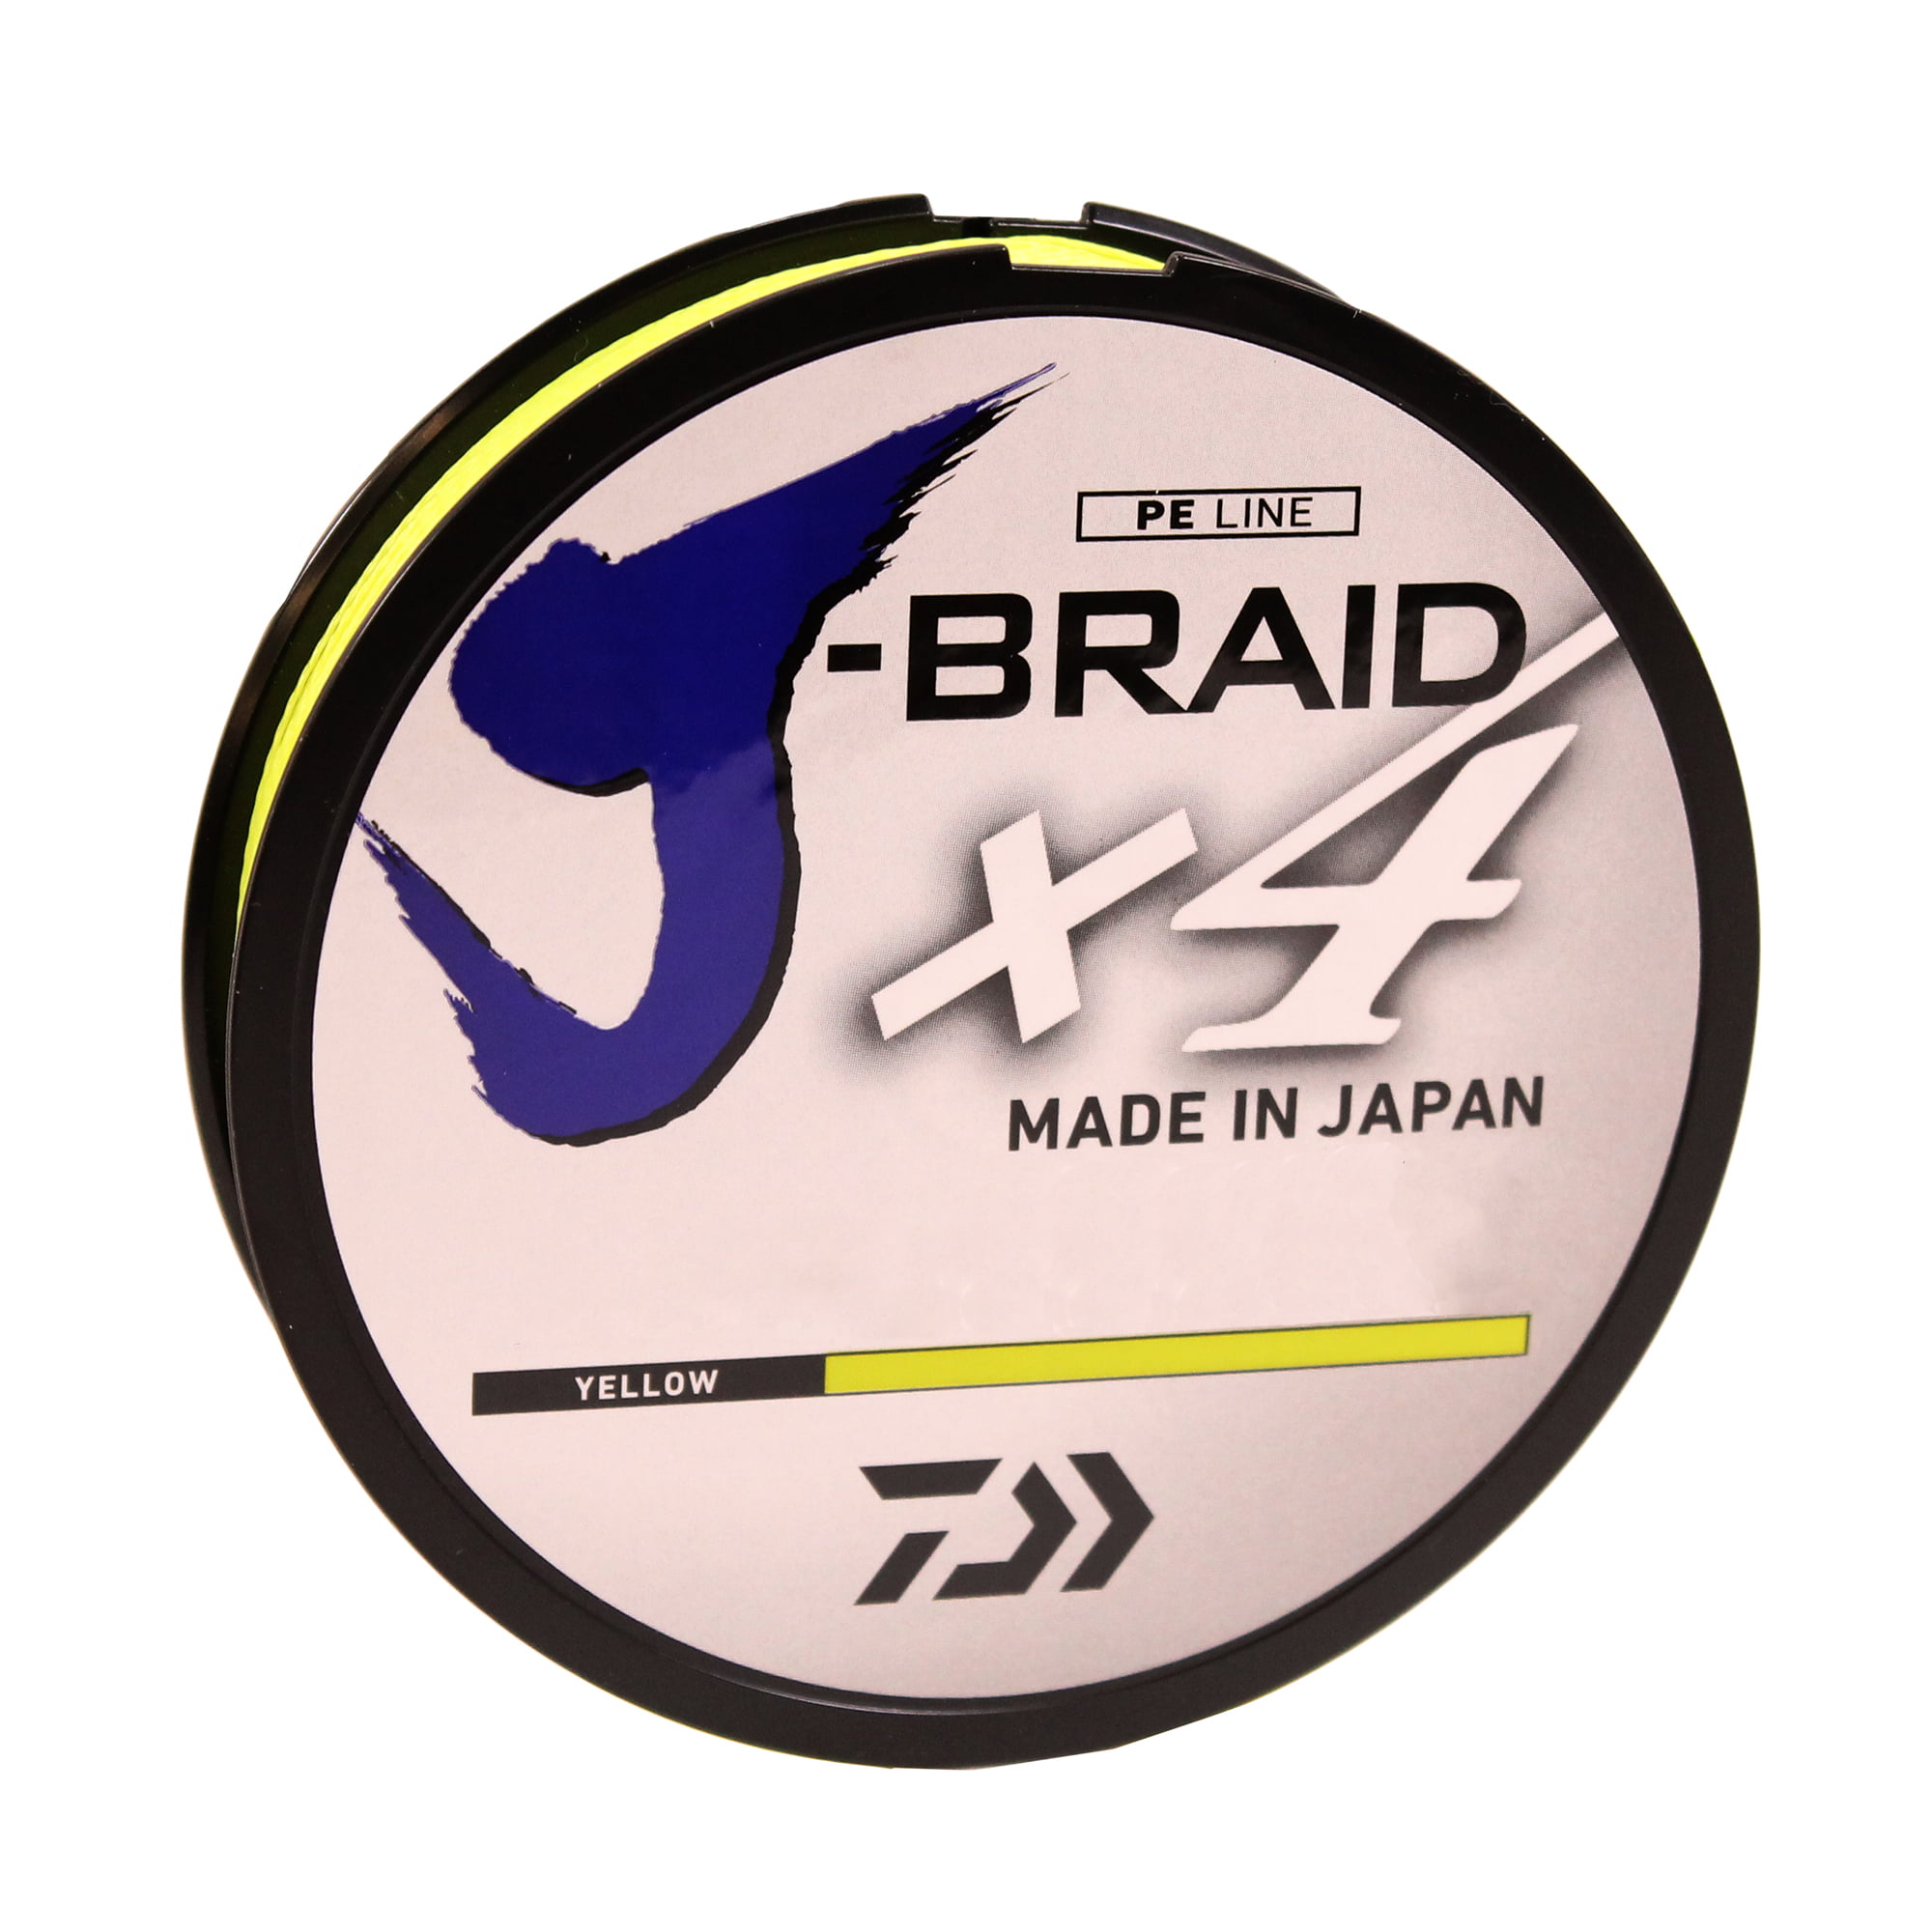 J-BRAID x4 Daiwa 